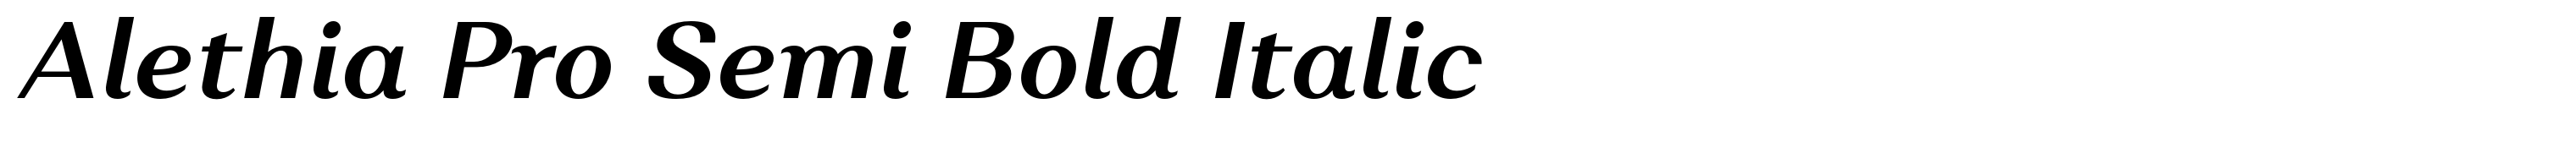 Alethia Pro Semi Bold Italic